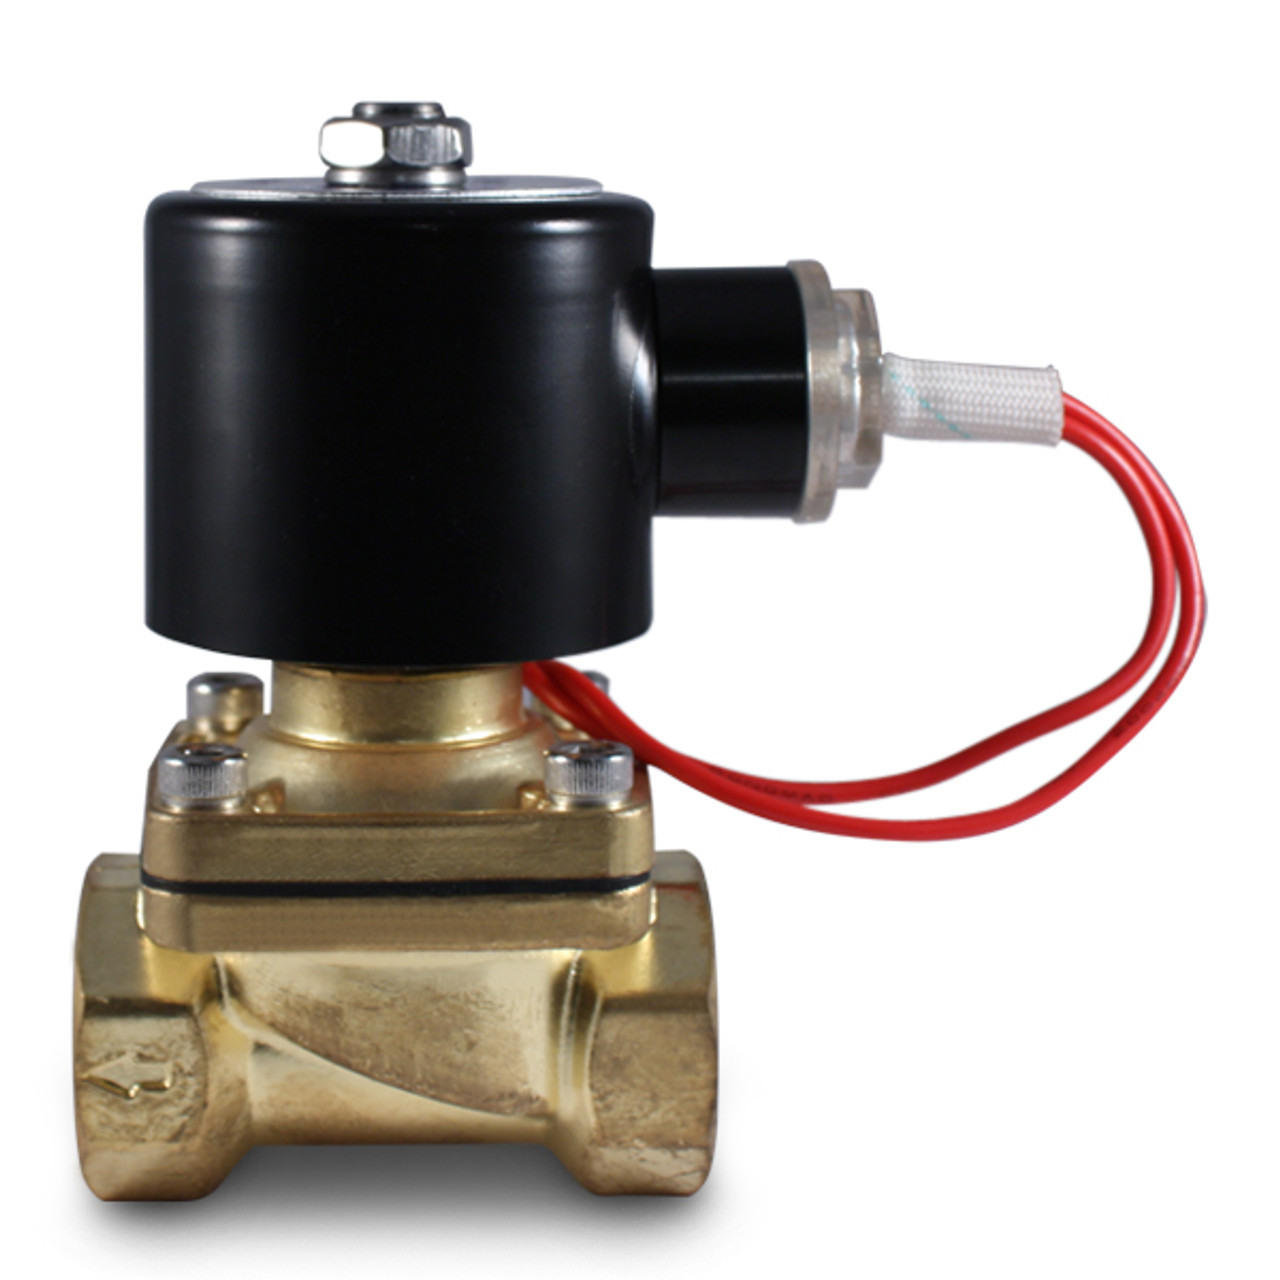 24vac electric solenoid valve